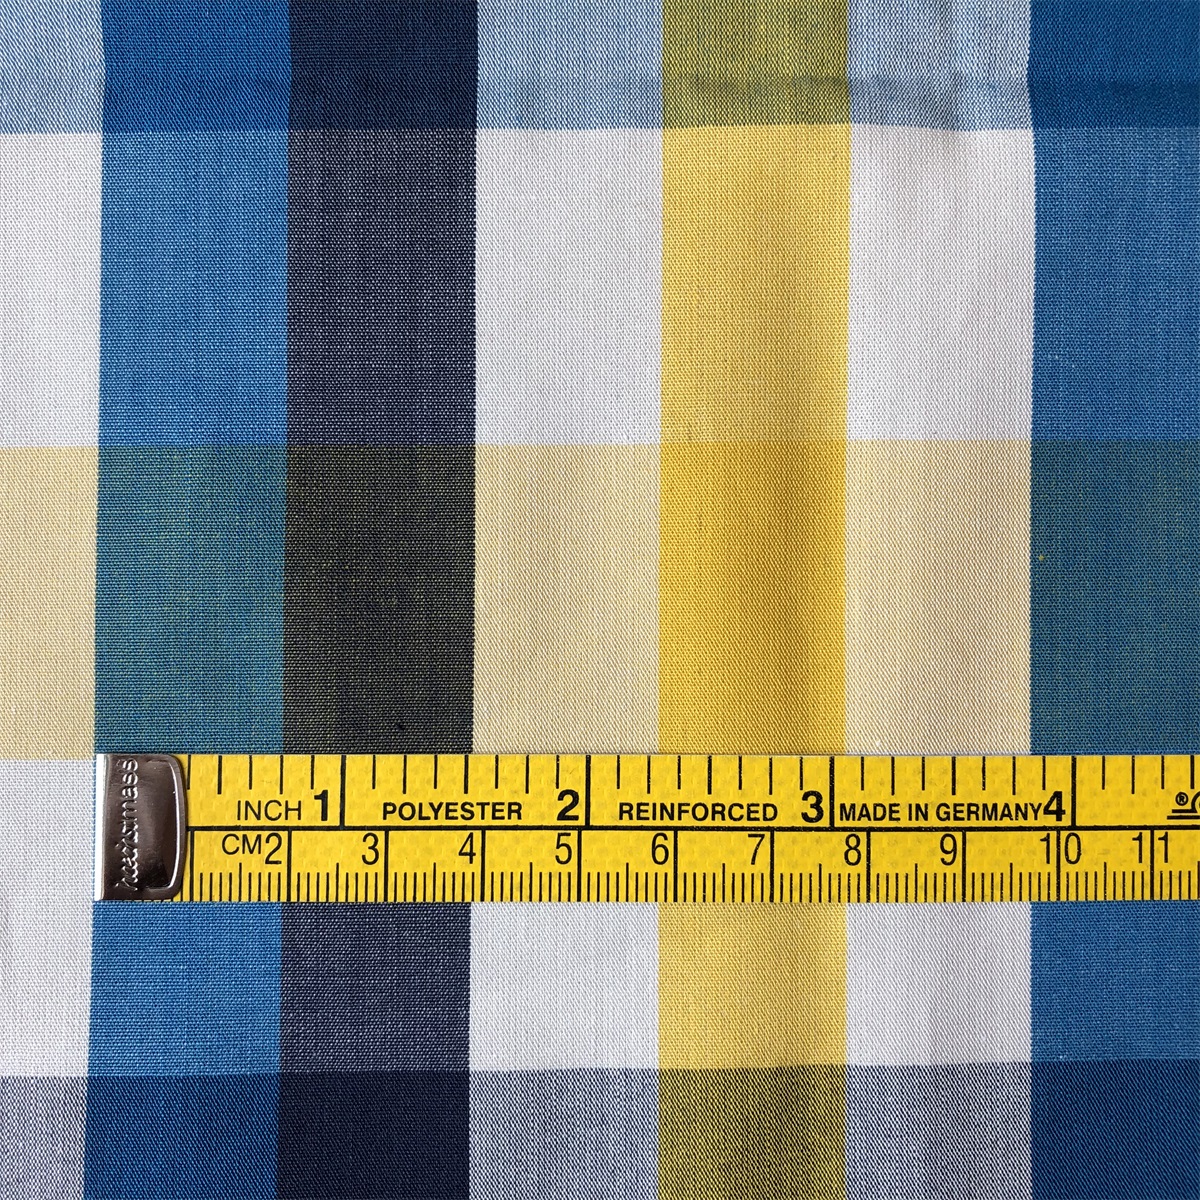 Cotton Yarn Dyed Fabric by compact yarn 100% cotton yarn dyed poplin plain check shirts woven fabric for men's casual shirts